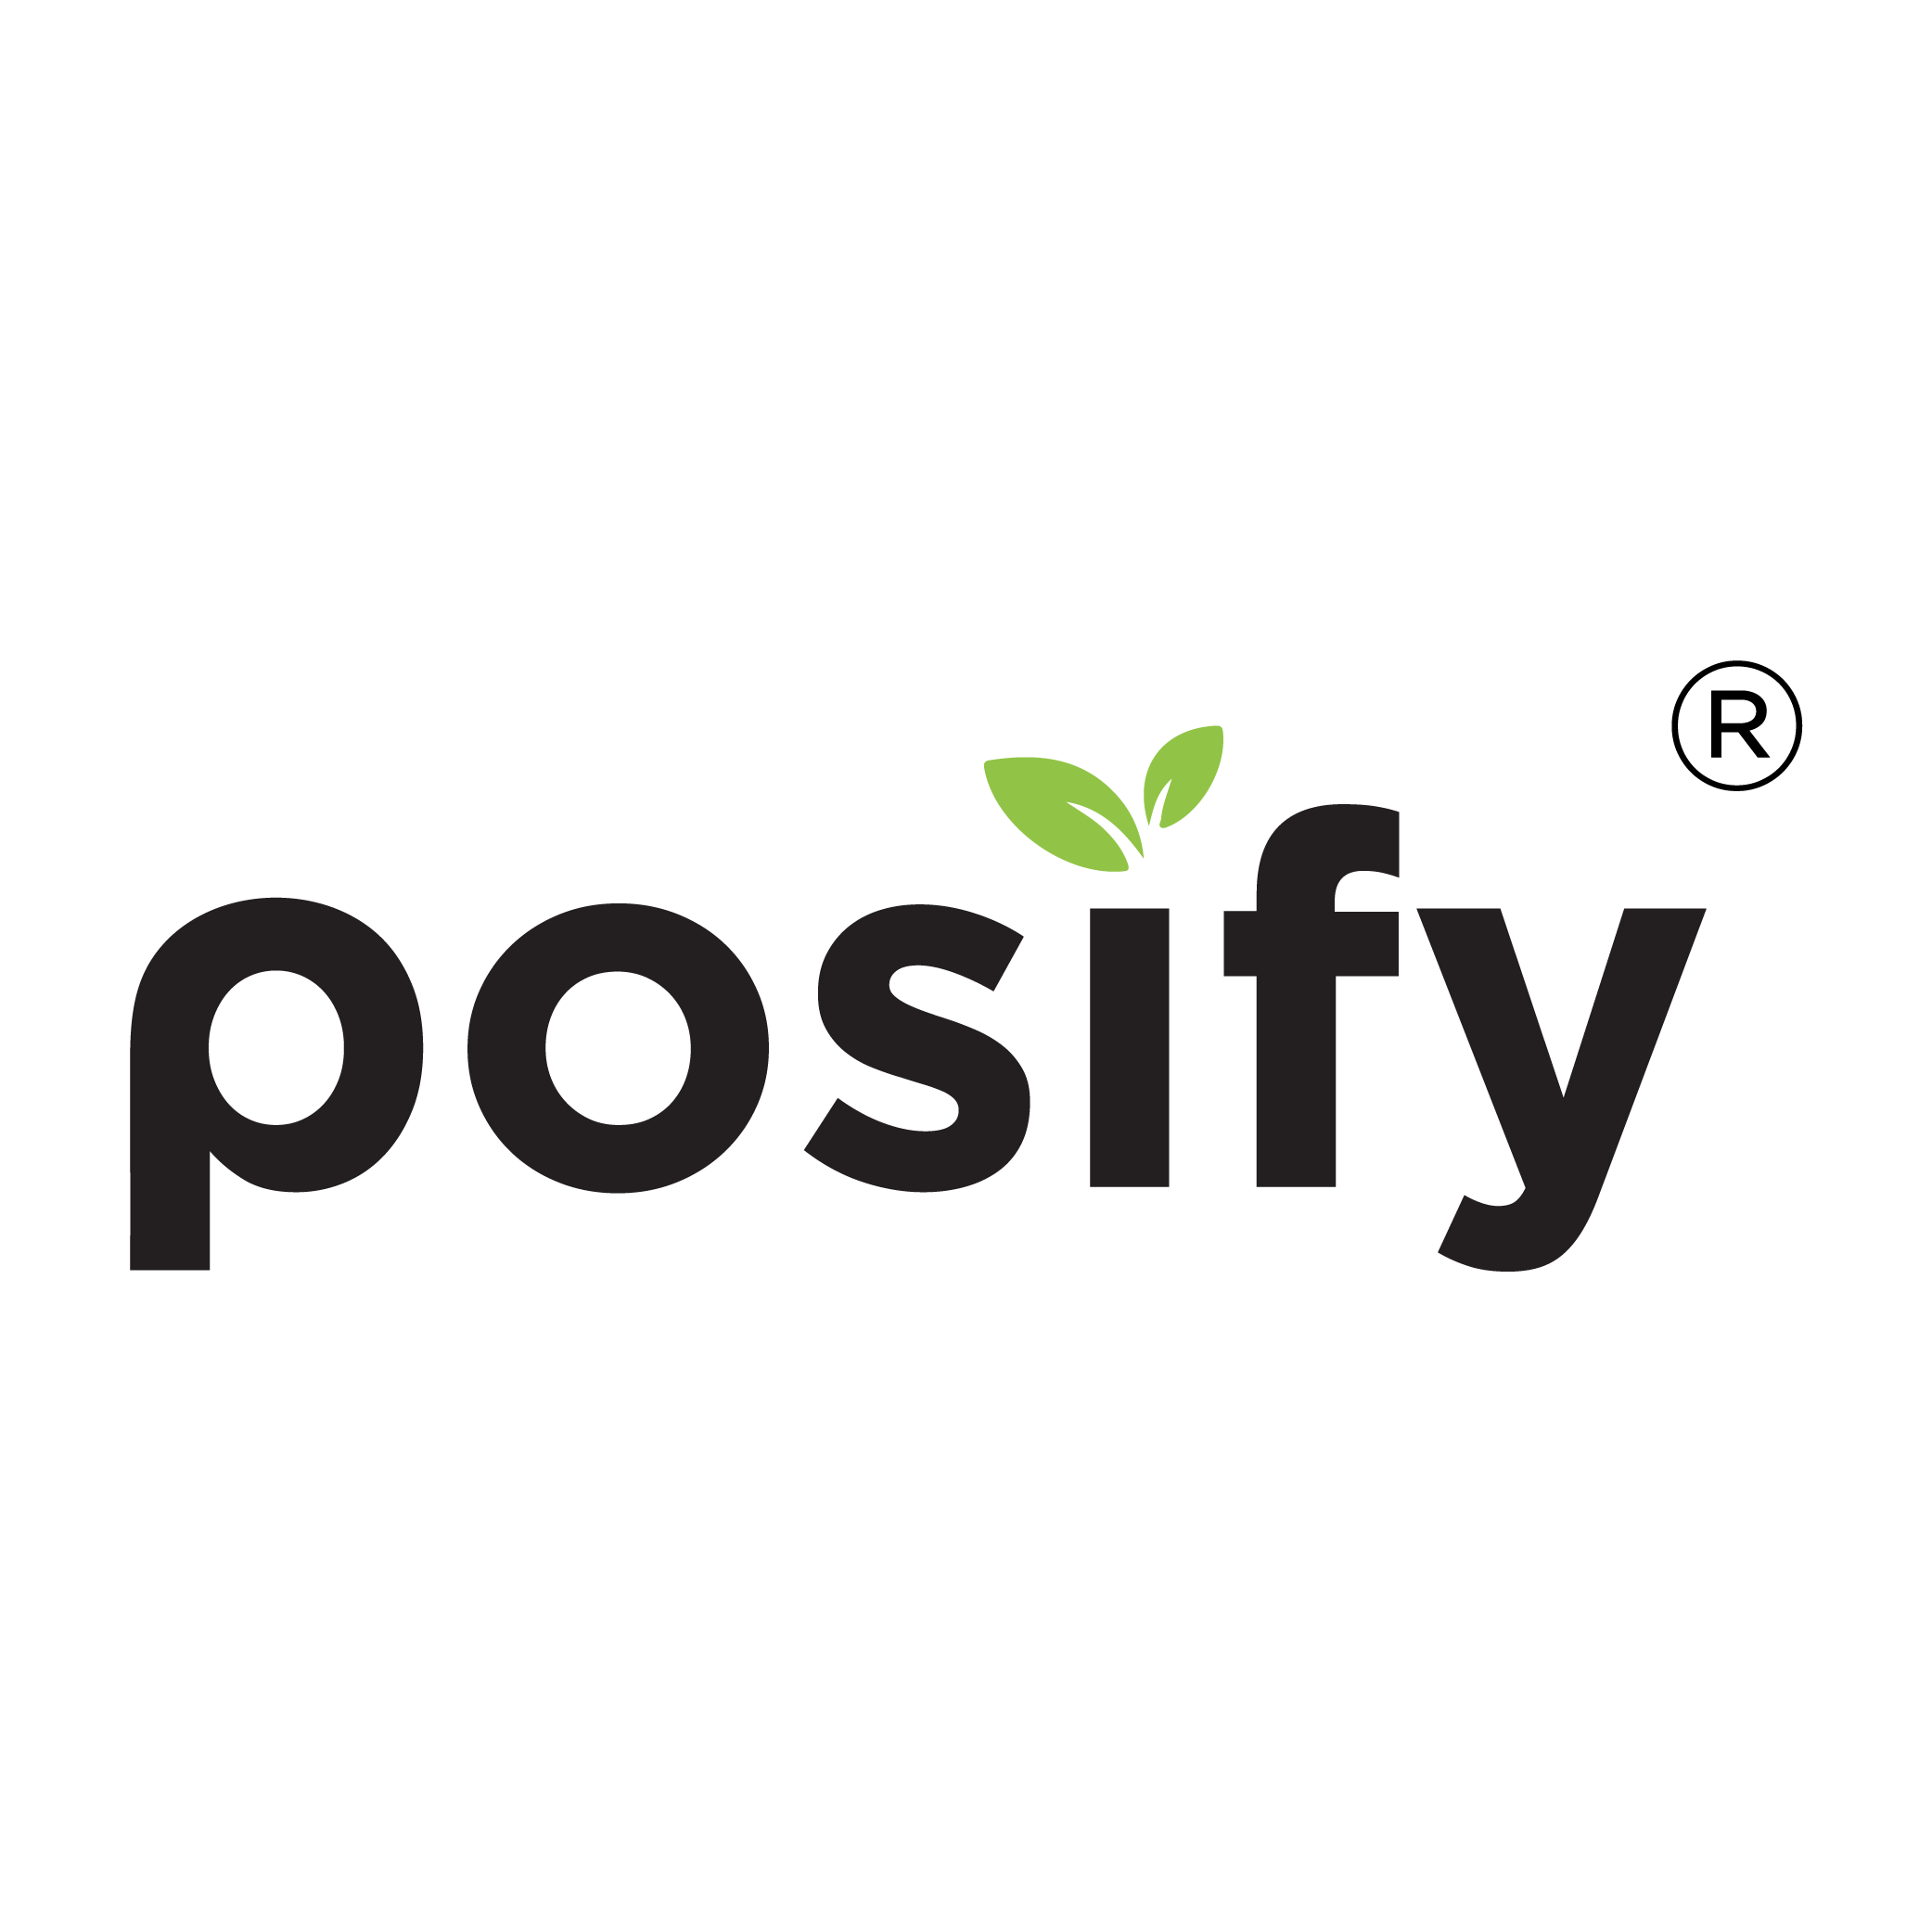 posify_r_logo-01.png